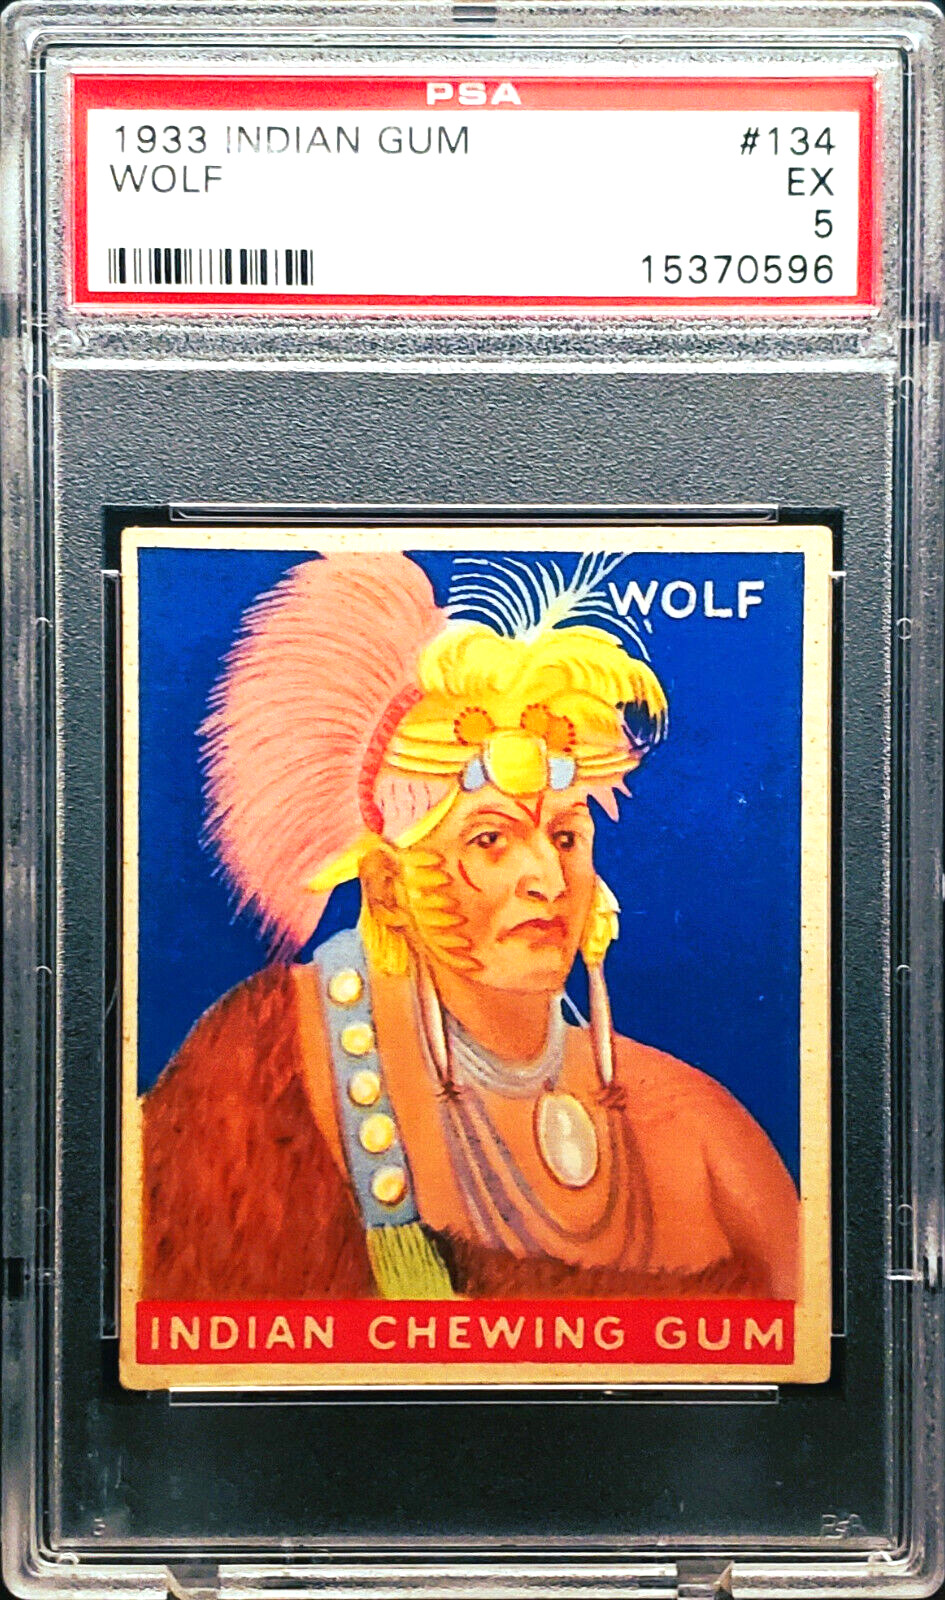 1933 R73 Goudey Indian Gum Card - #134 - WOLF - Series 192 - PSA 5 - EXCELLENT